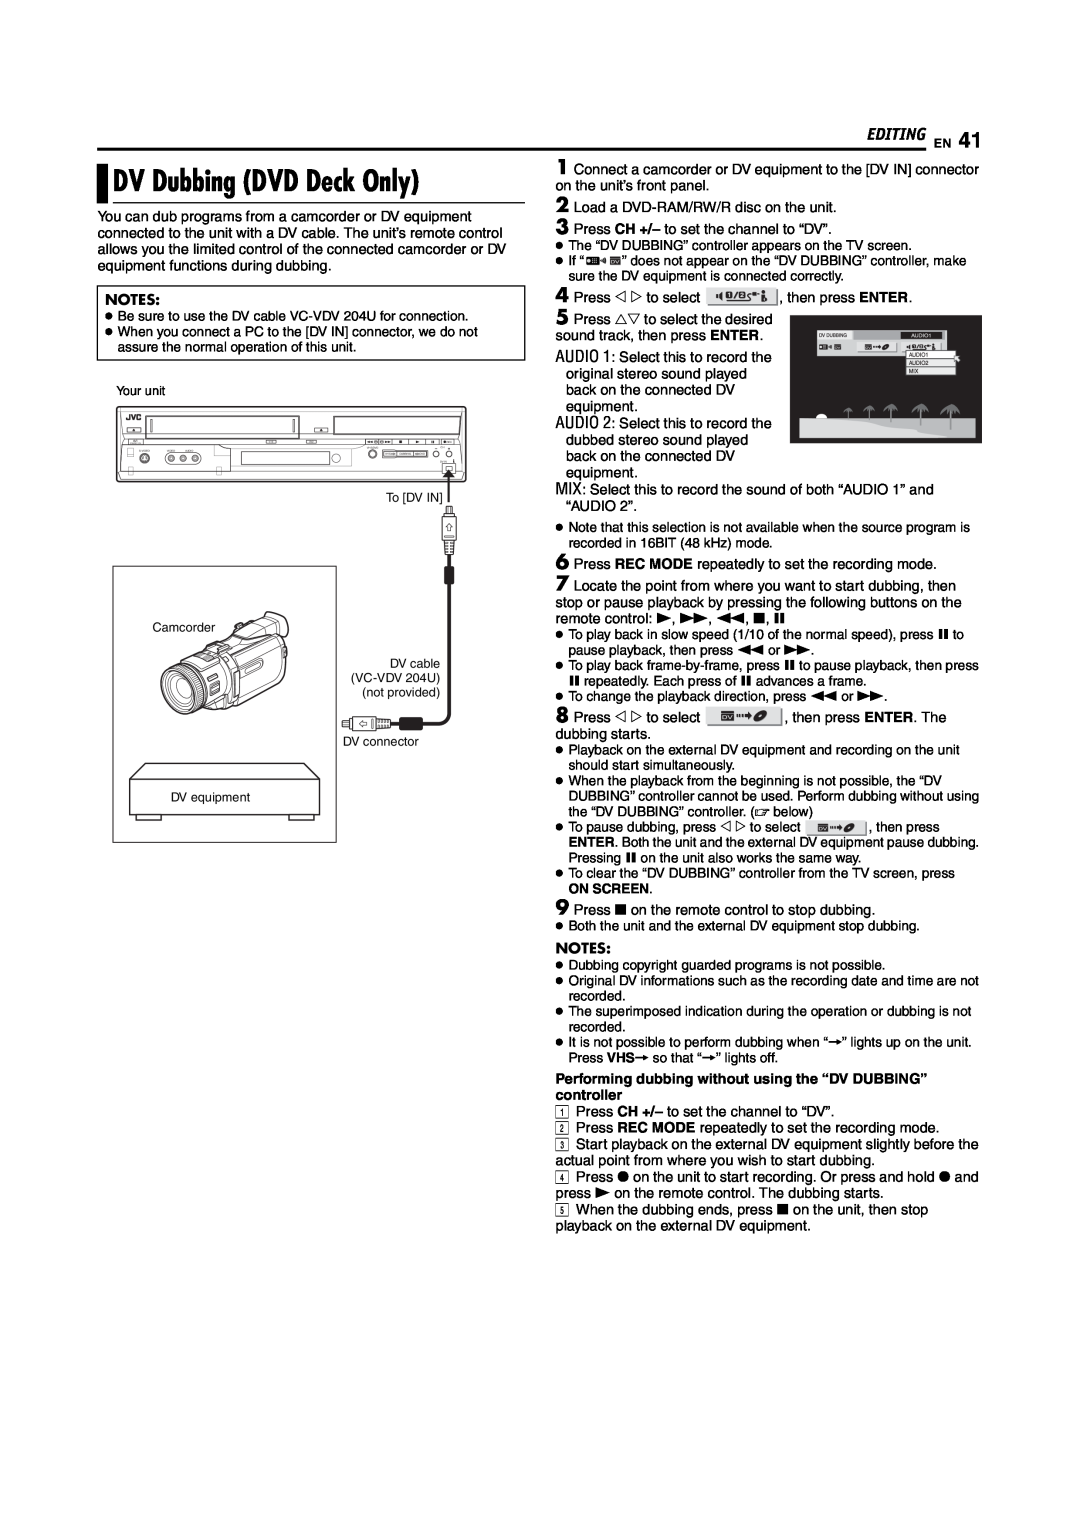 JVC DR-MV5S manual DV Dubbing DVD Deck Only, Editing En, Performing dubbing without using the “DV DUBBING” controller 